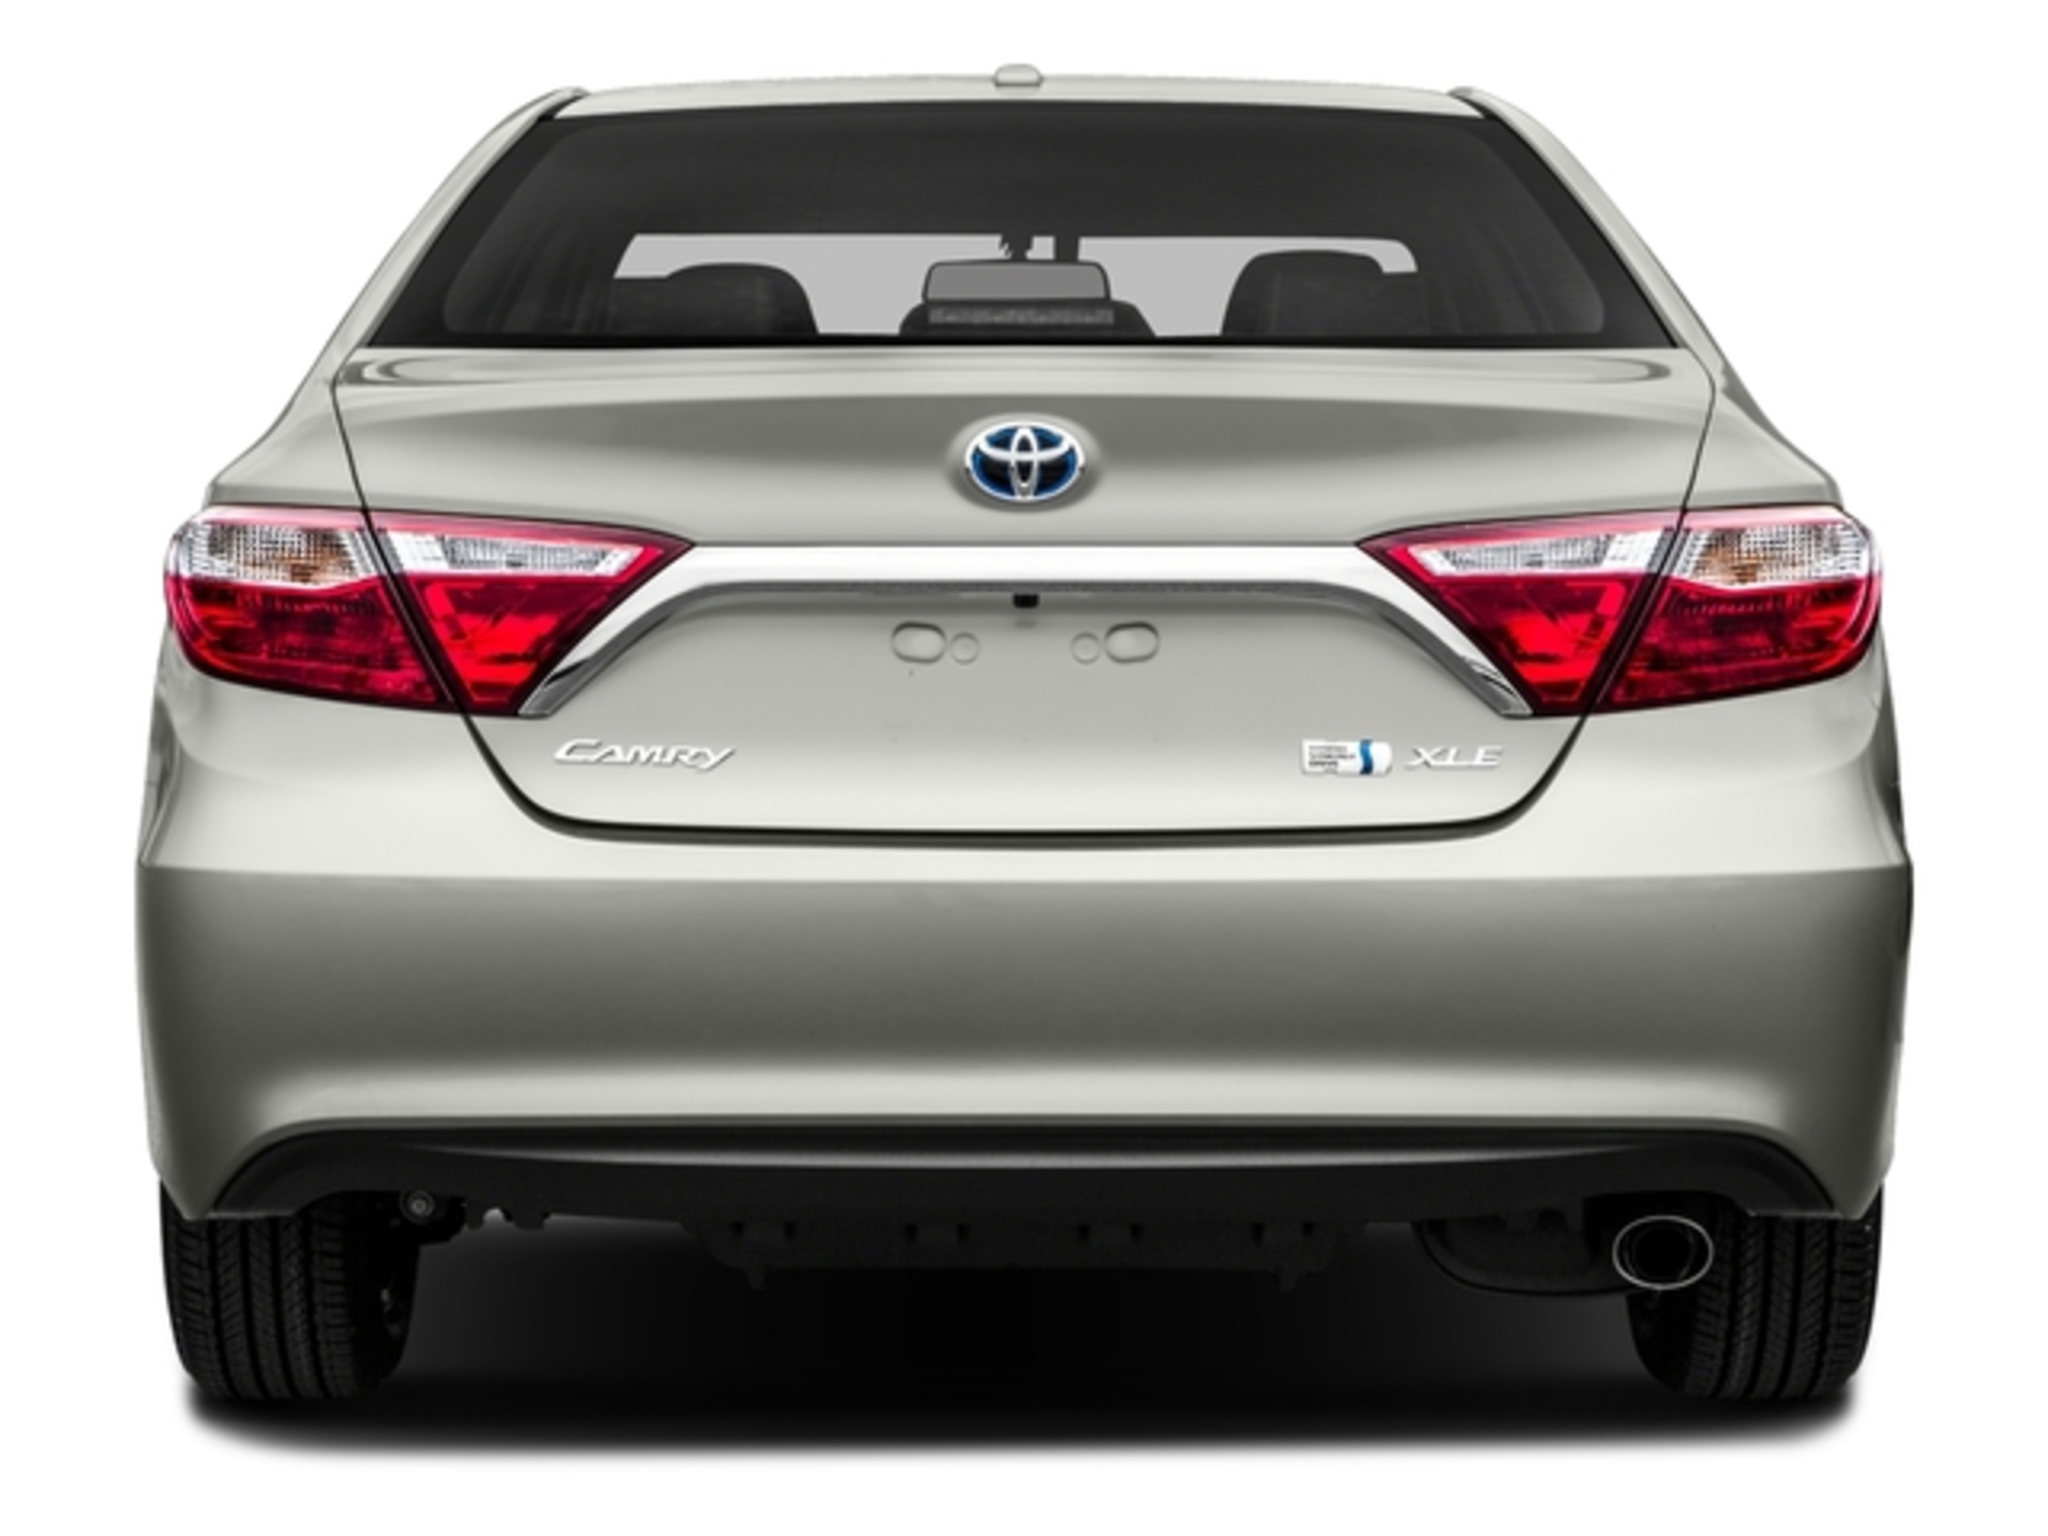 2016 Toyota Camry Hybrid - Compare Prices, Trims, Options, Specs, Photos, Reviews, Deals